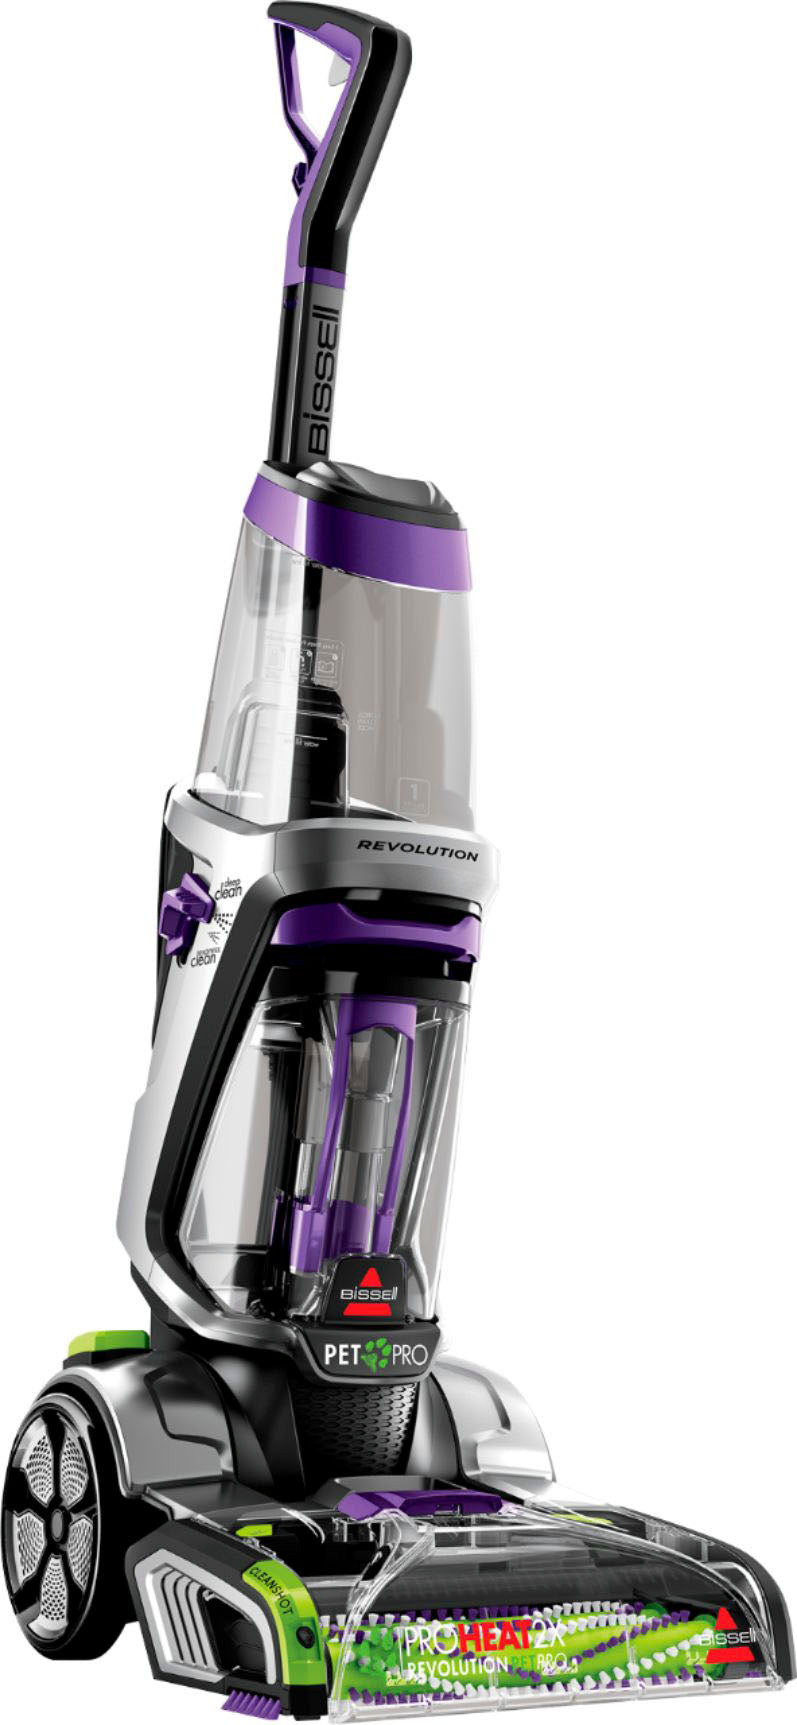 BISSELL ProHeat 2X Revolution Pet Pro Plus Carpet Cleaner - silver/purple_1